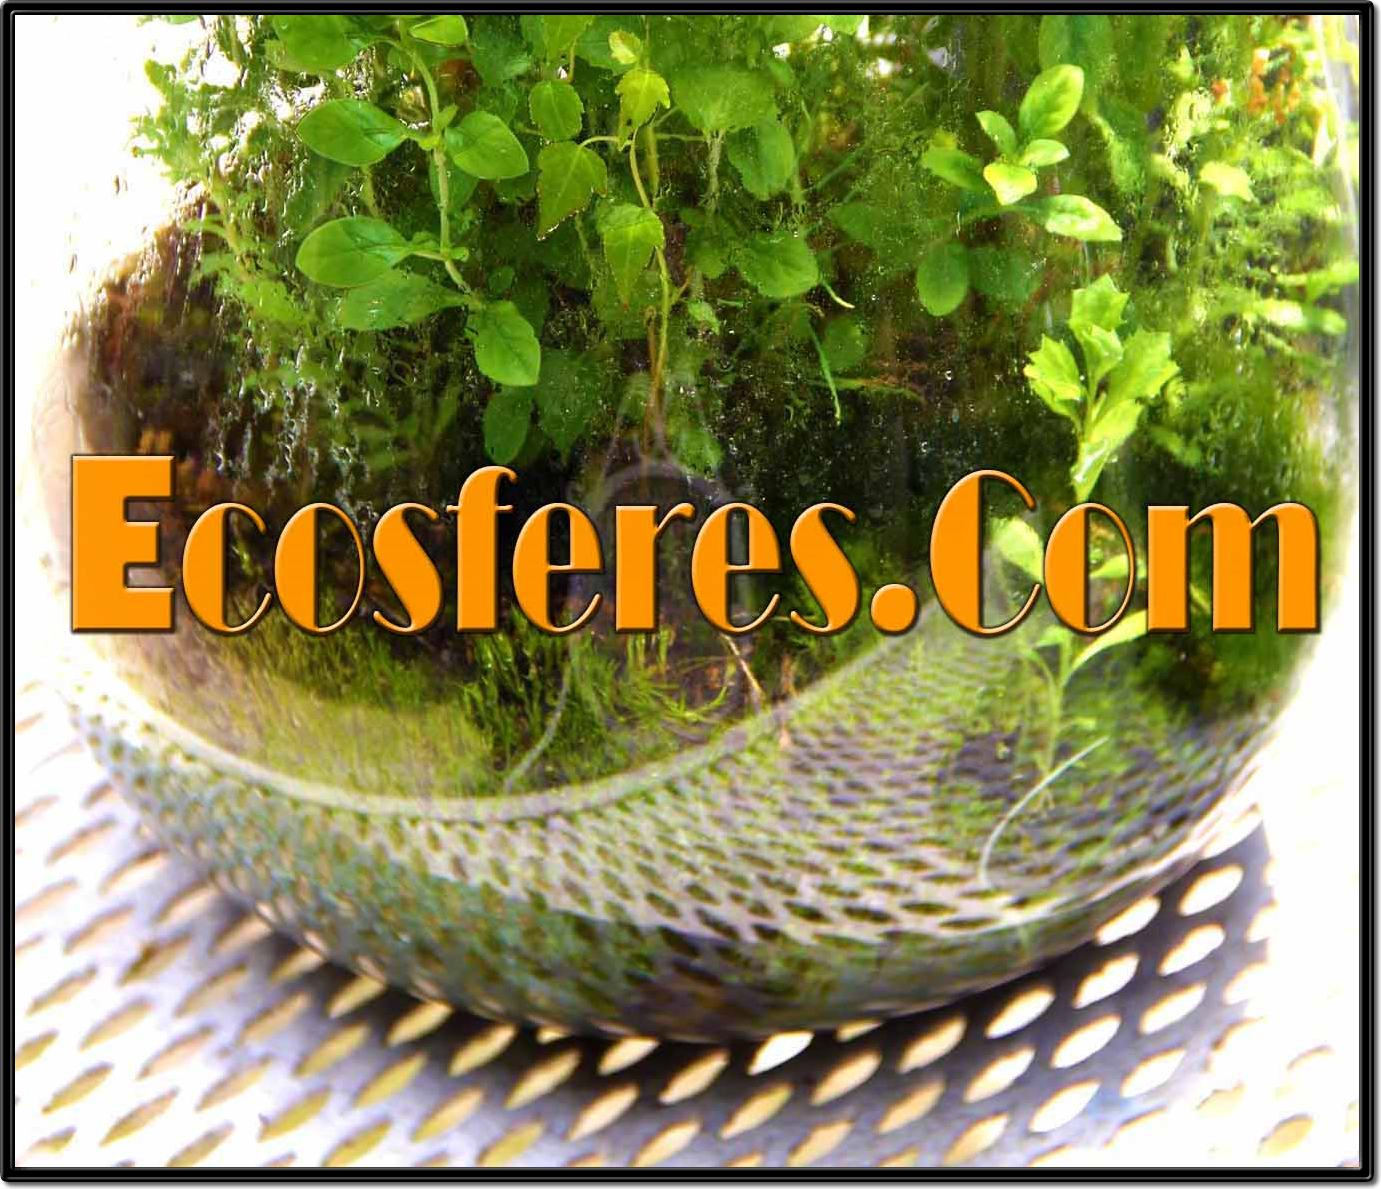 Ecosferes by Dapacu